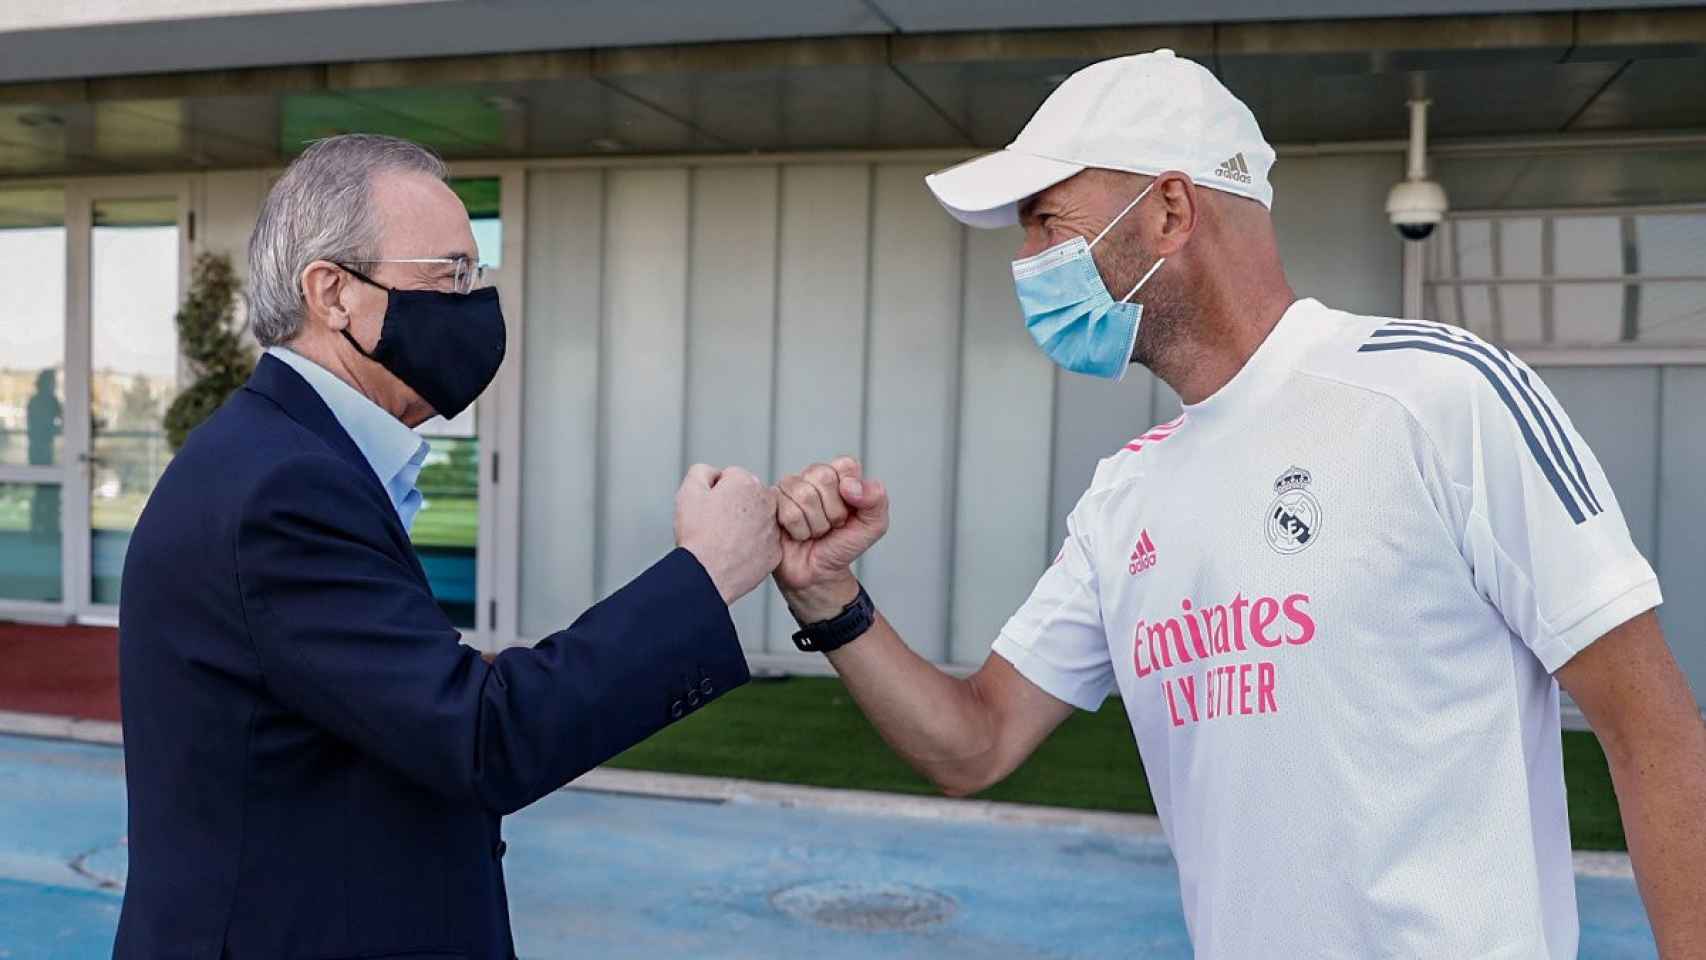 Zinedine Zidane saludando a Florentino Pérez /REAL MADRID CF